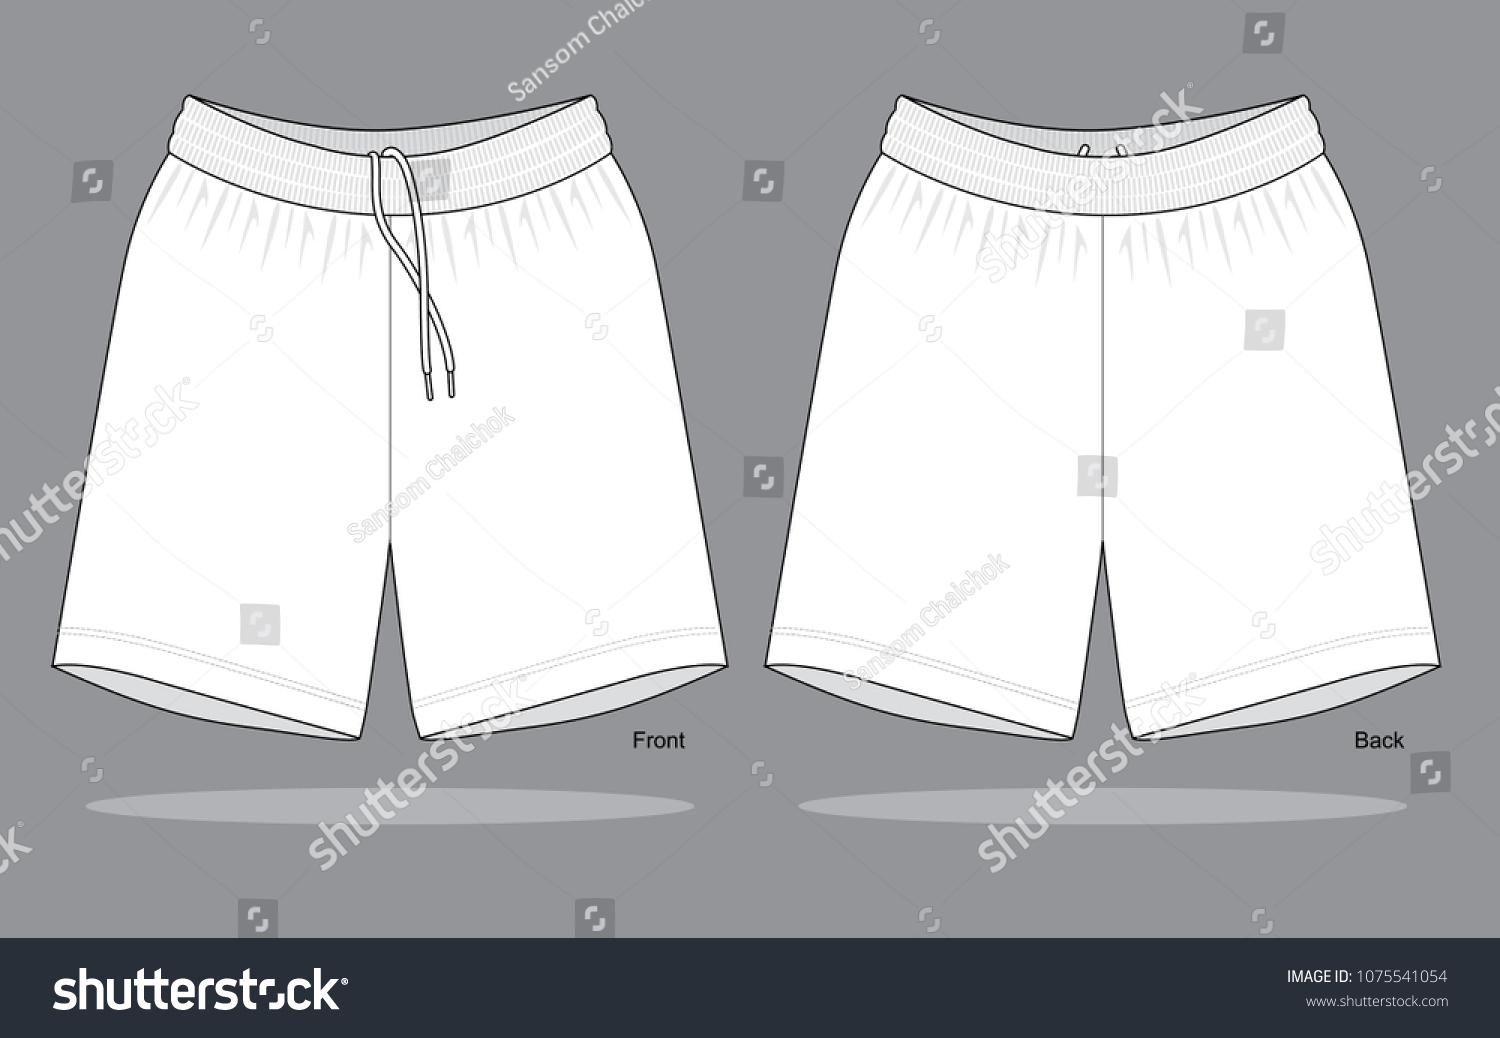 White basketball shorts Stock Illustrations, Images & Vectors ...